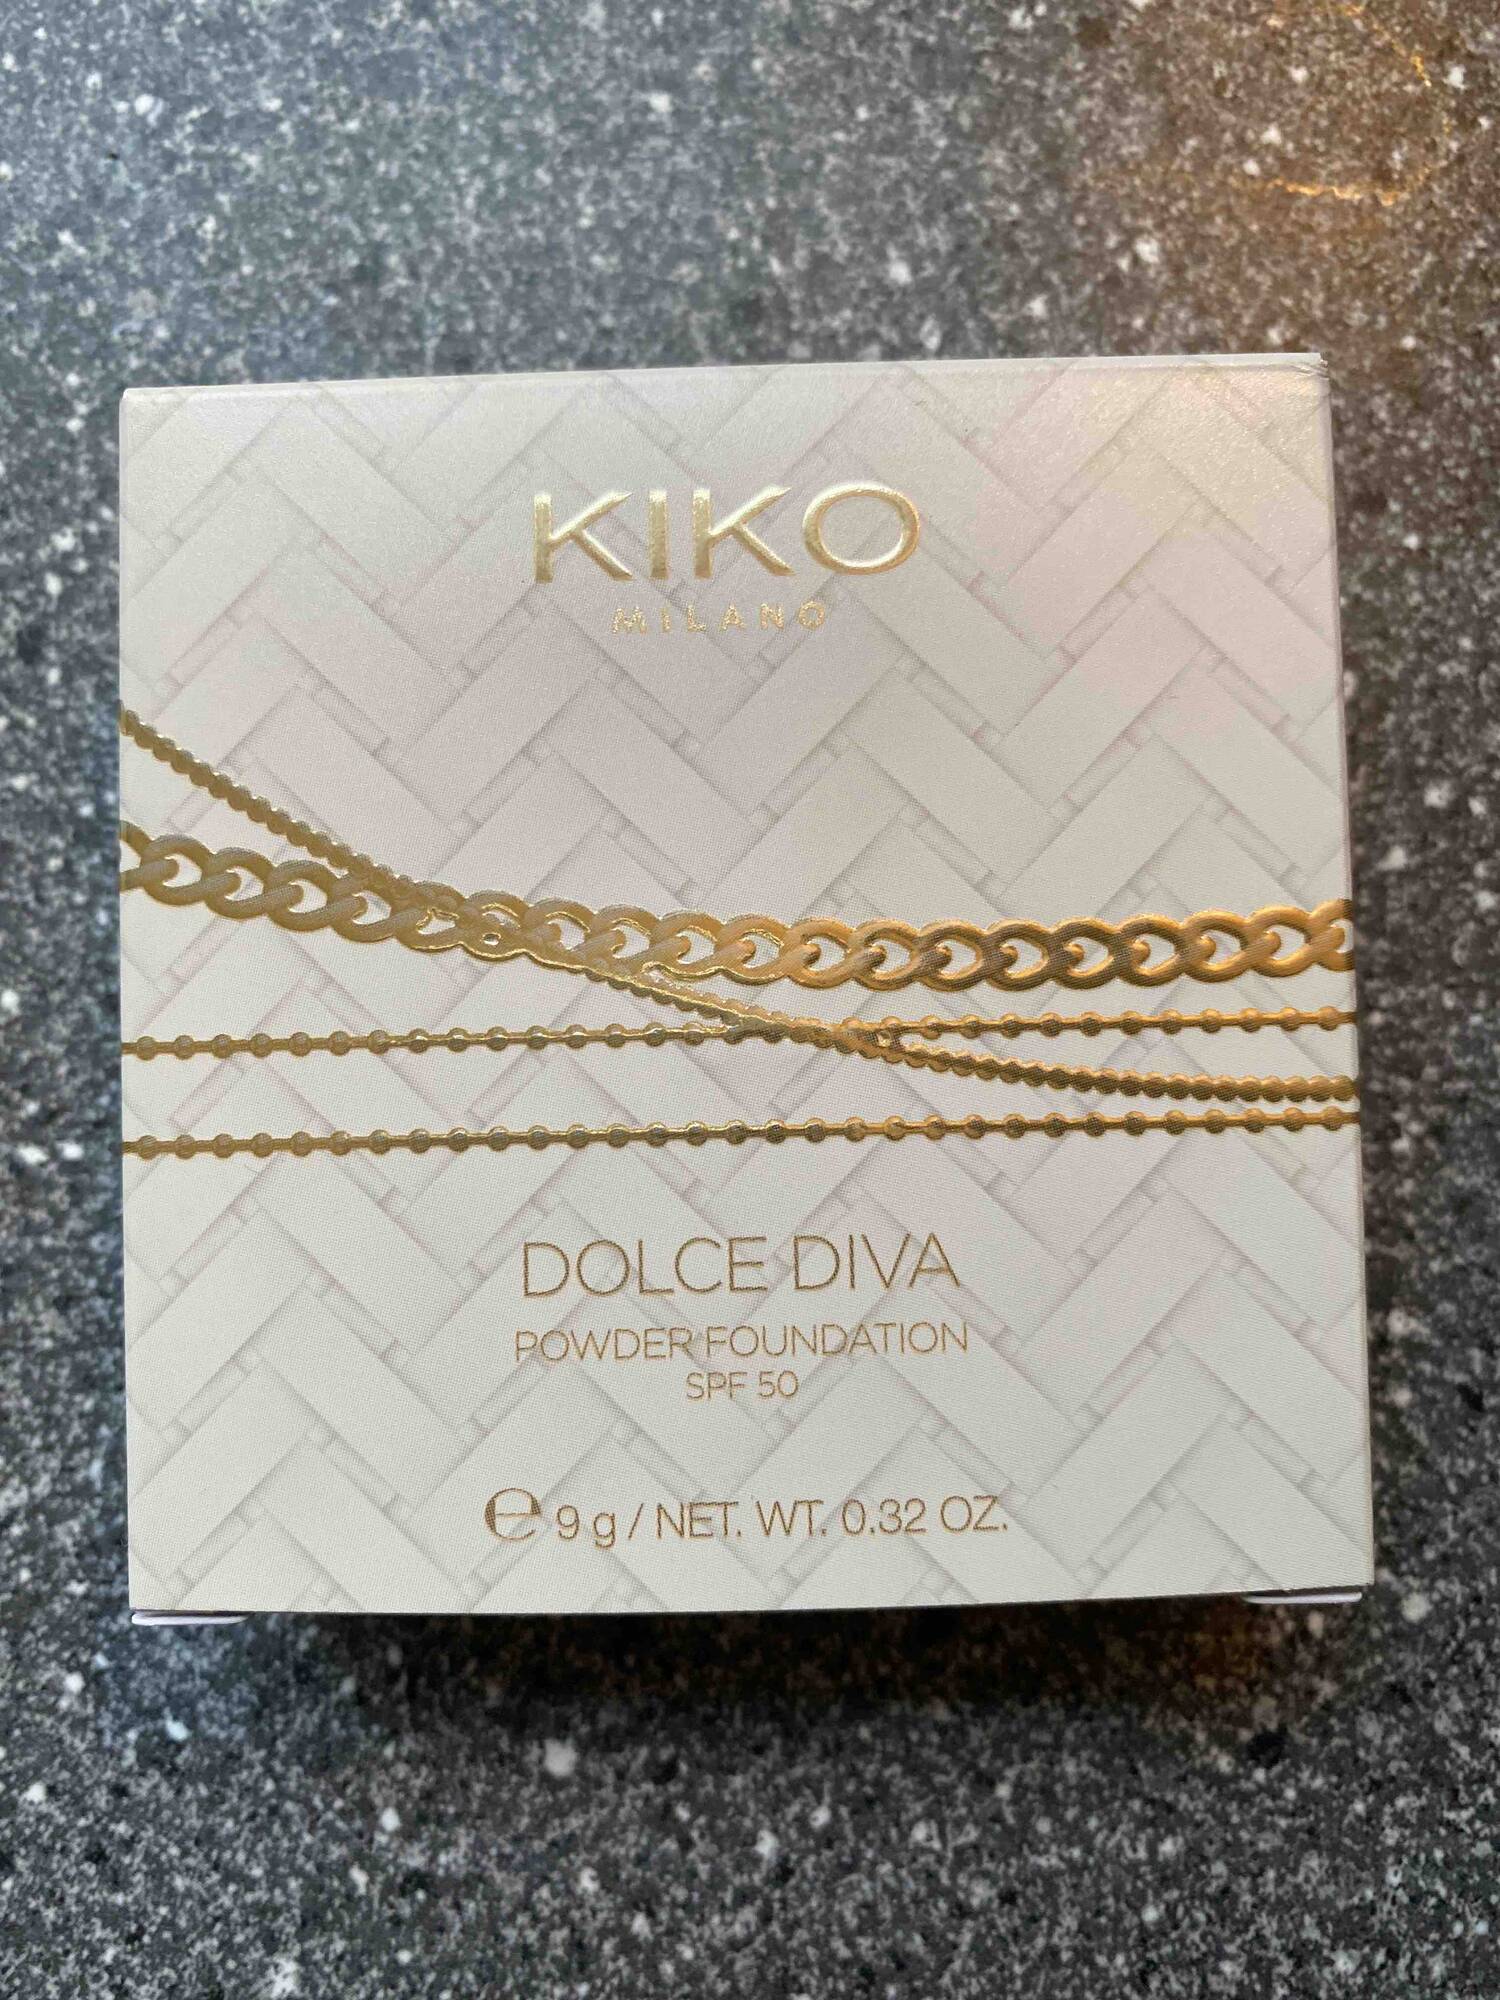 KIKO - Dolce Diva - Powder foundation spf 50